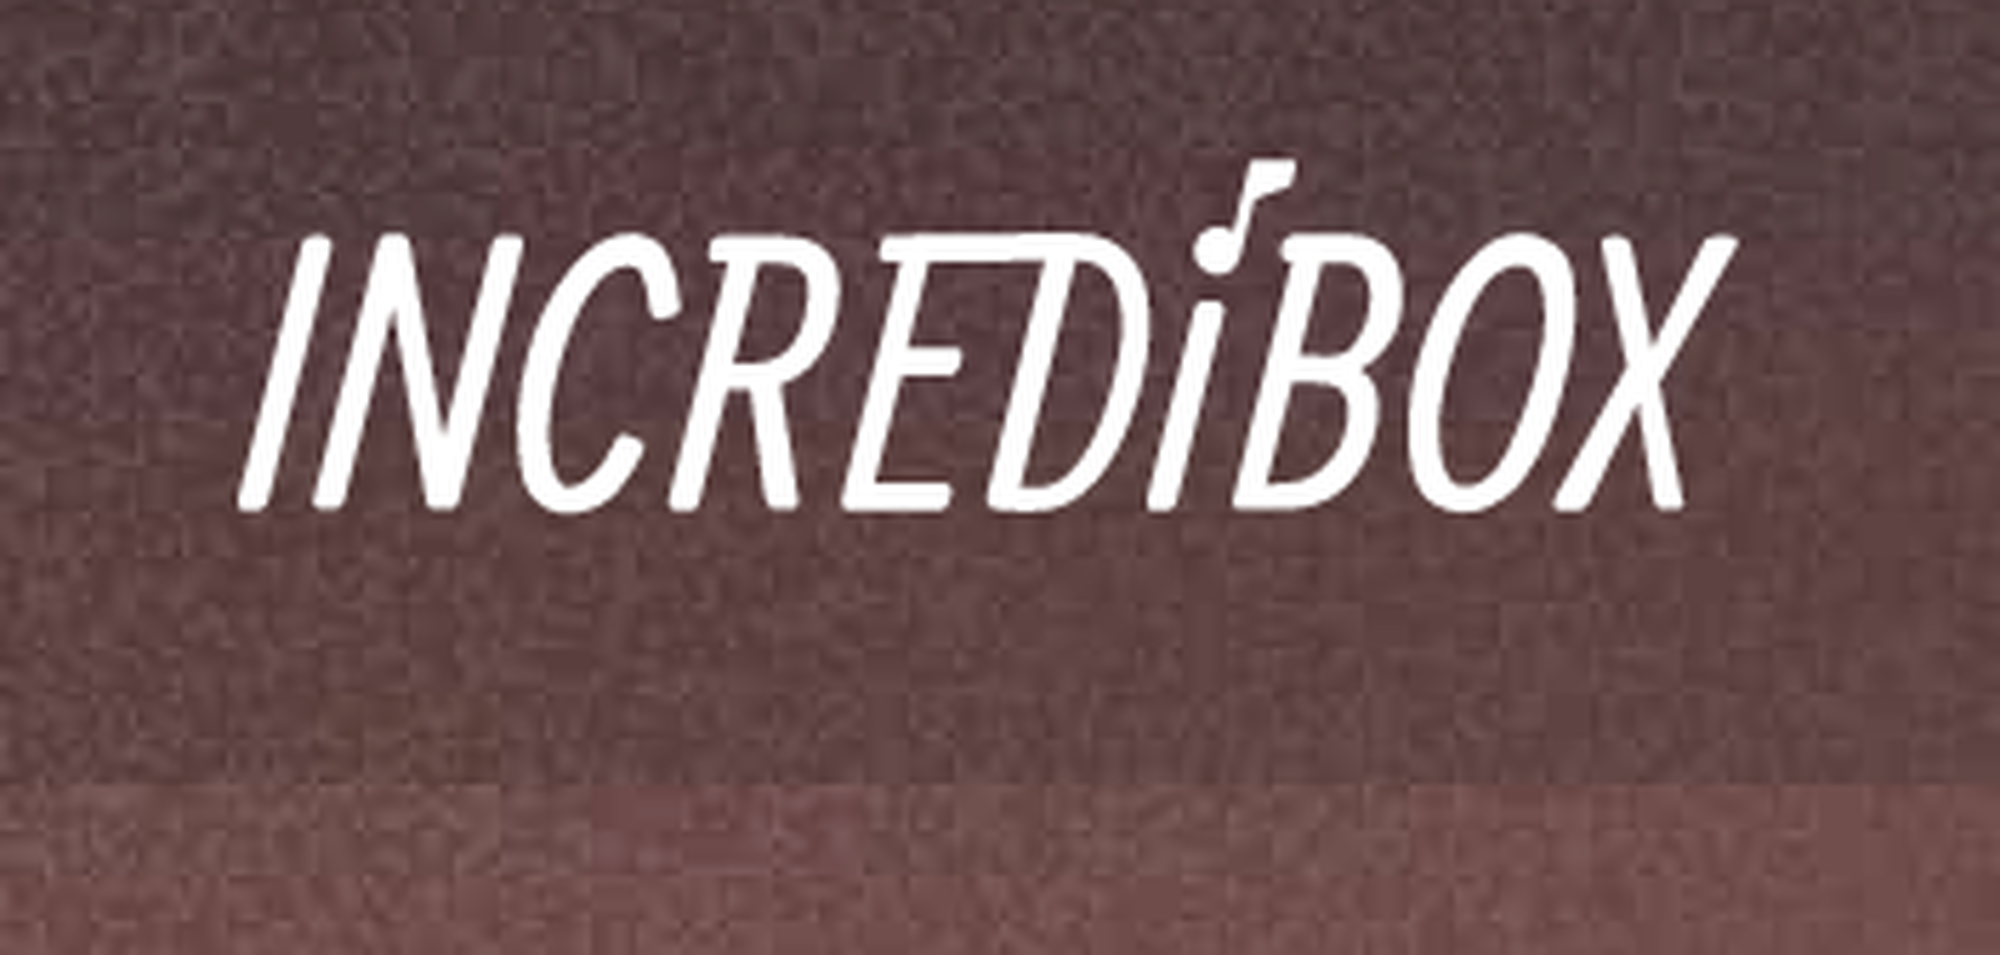 Incredibox logo